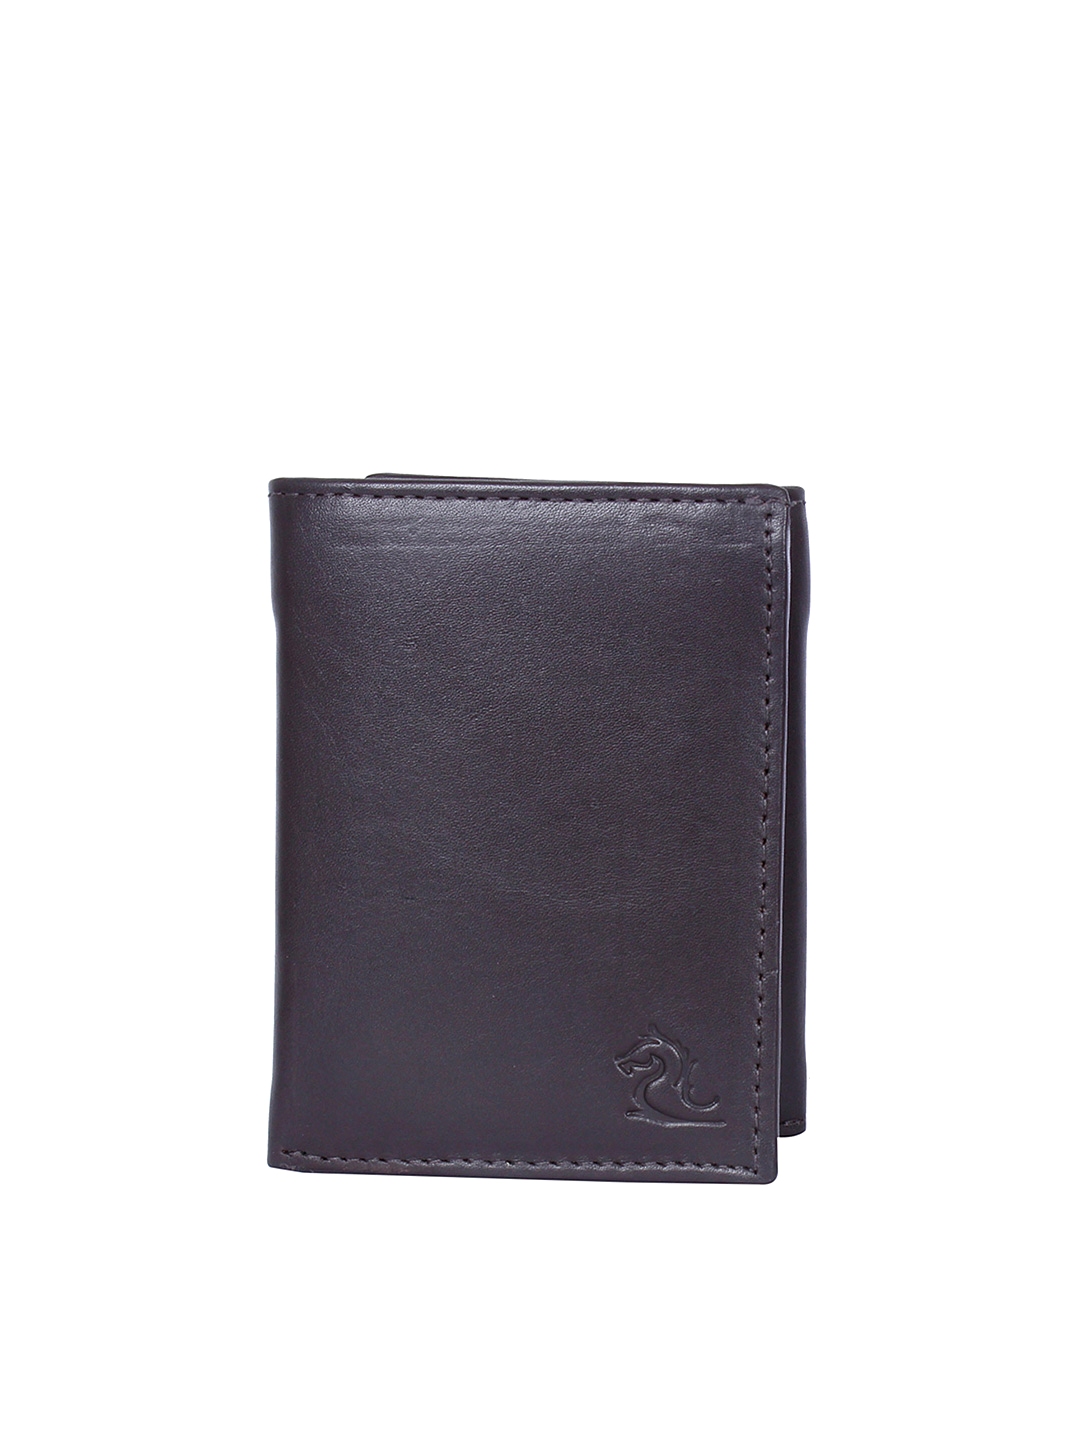 Buy Kara Men Brown Leather Wallet - Wallets for Men 1359445 | Myntra